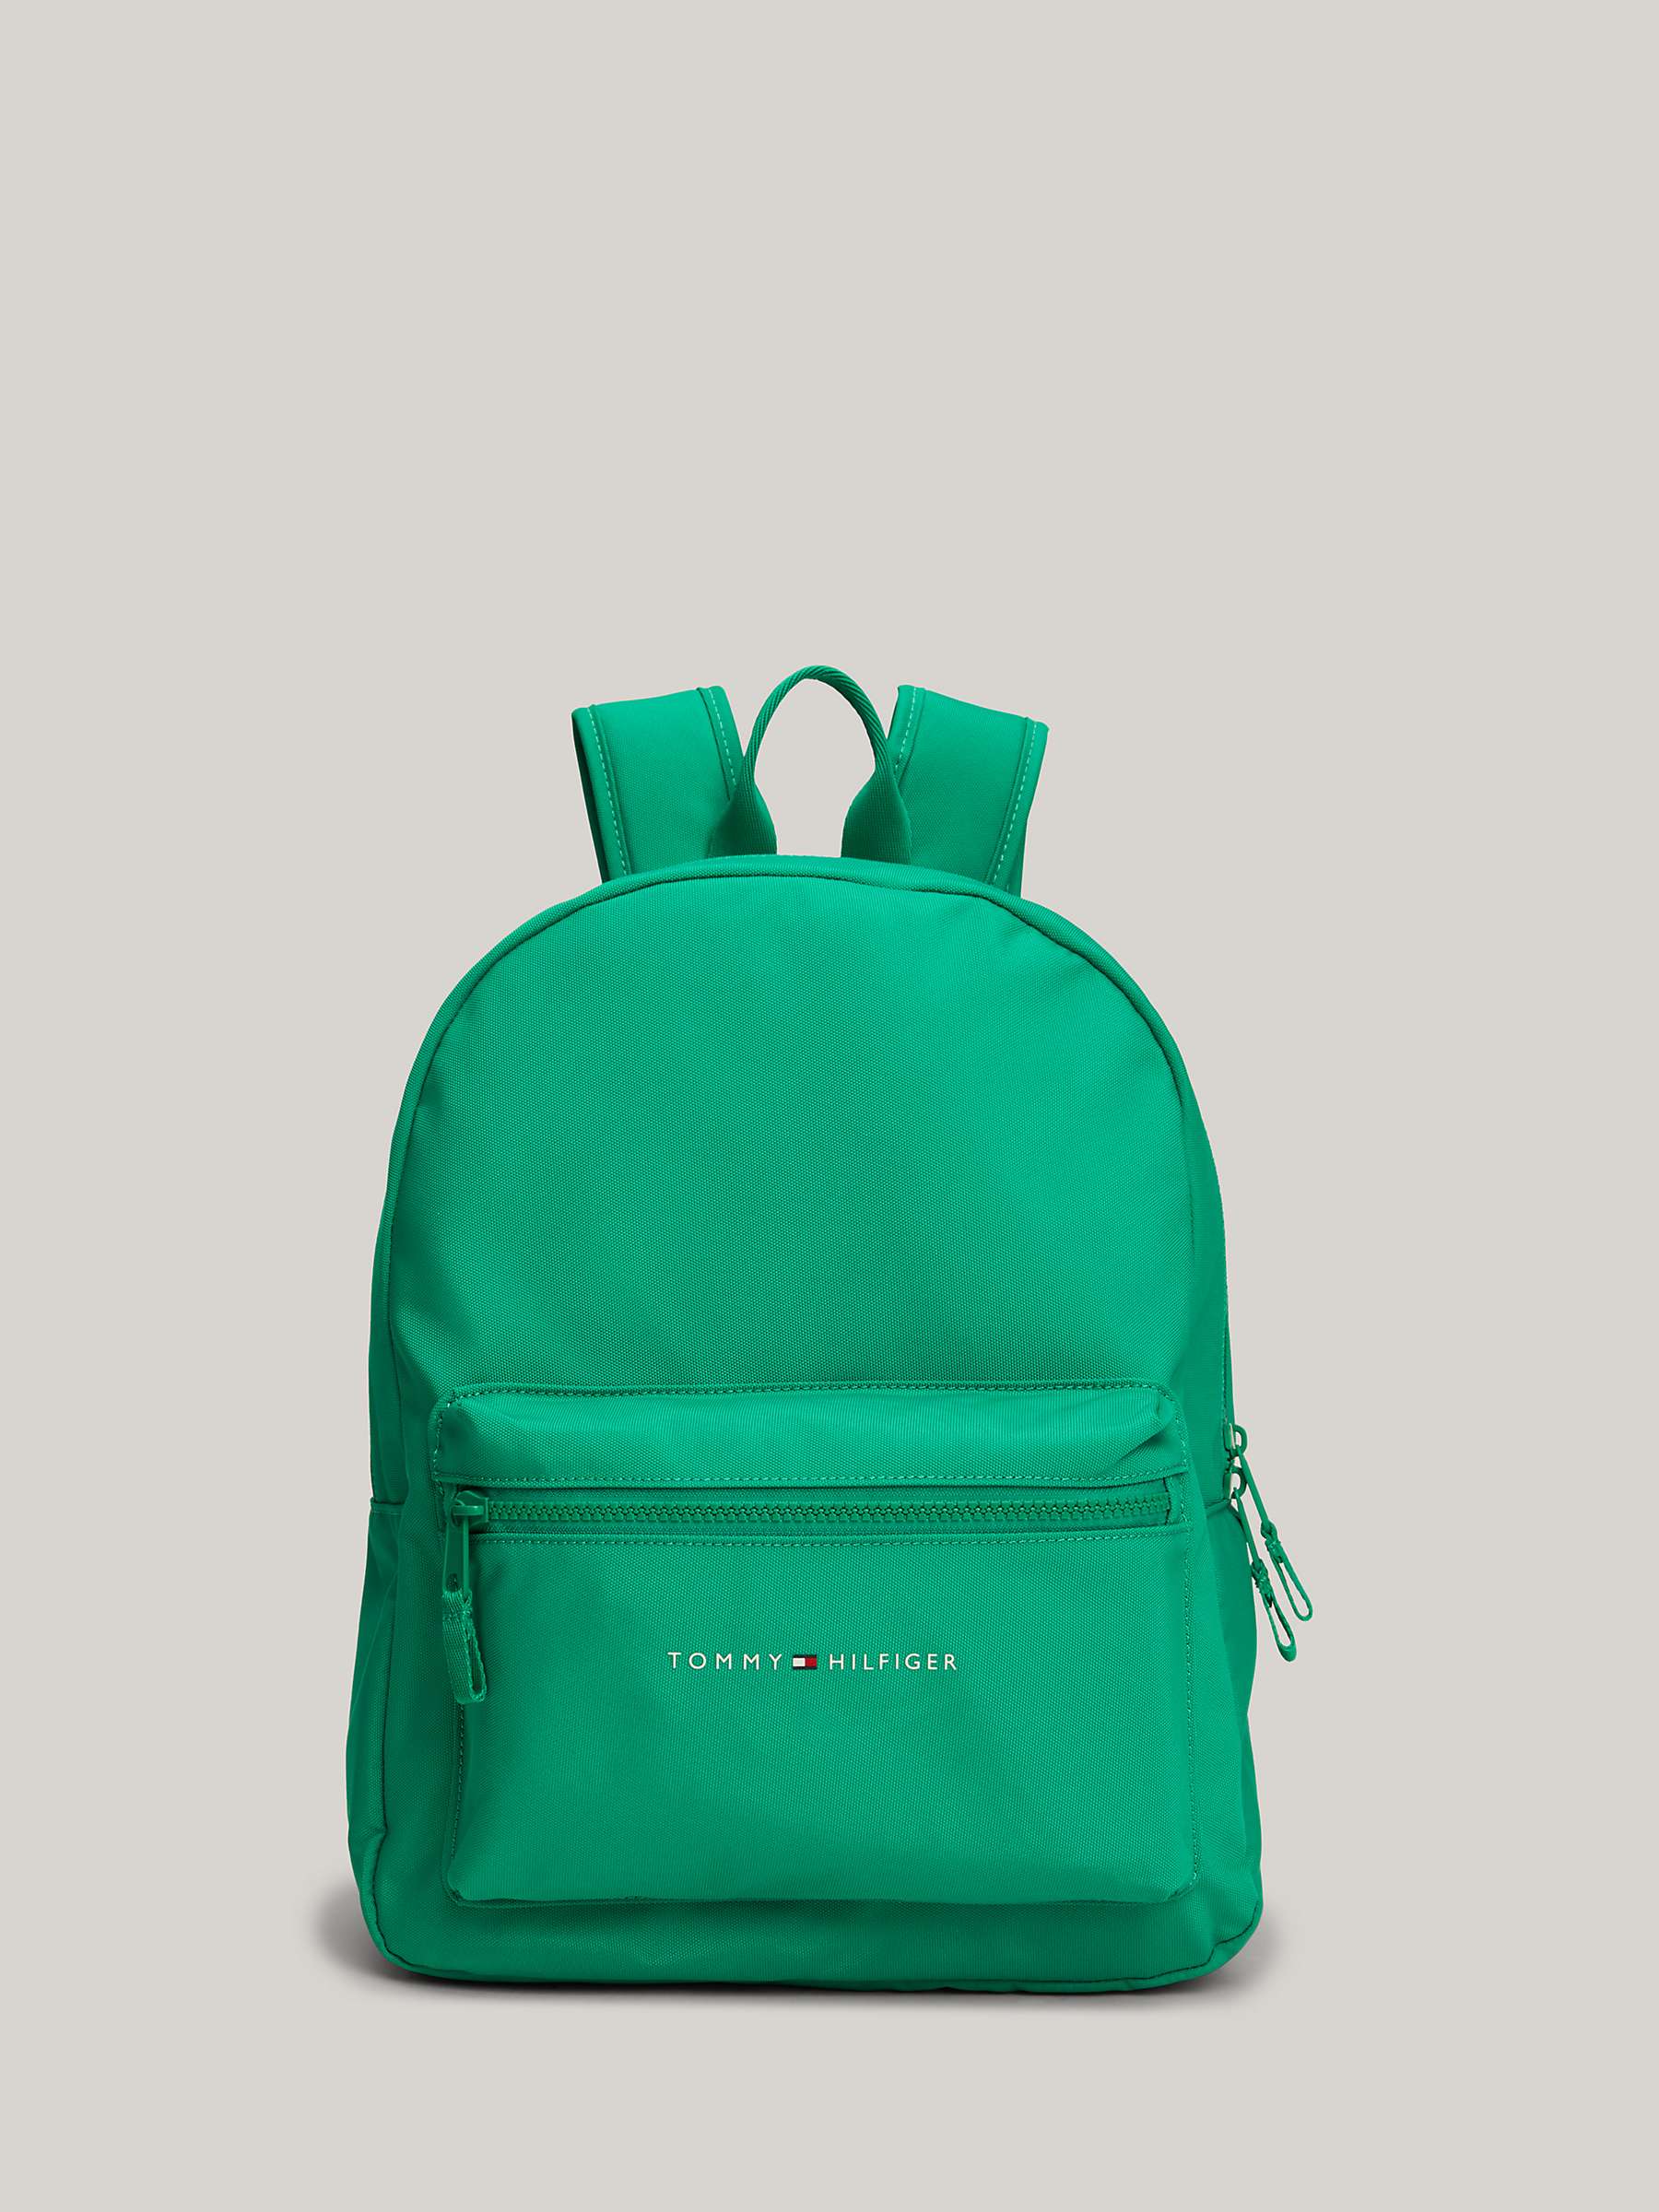 Buy Tommy Hilfiger Kids' The Essential Backpack Online at johnlewis.com